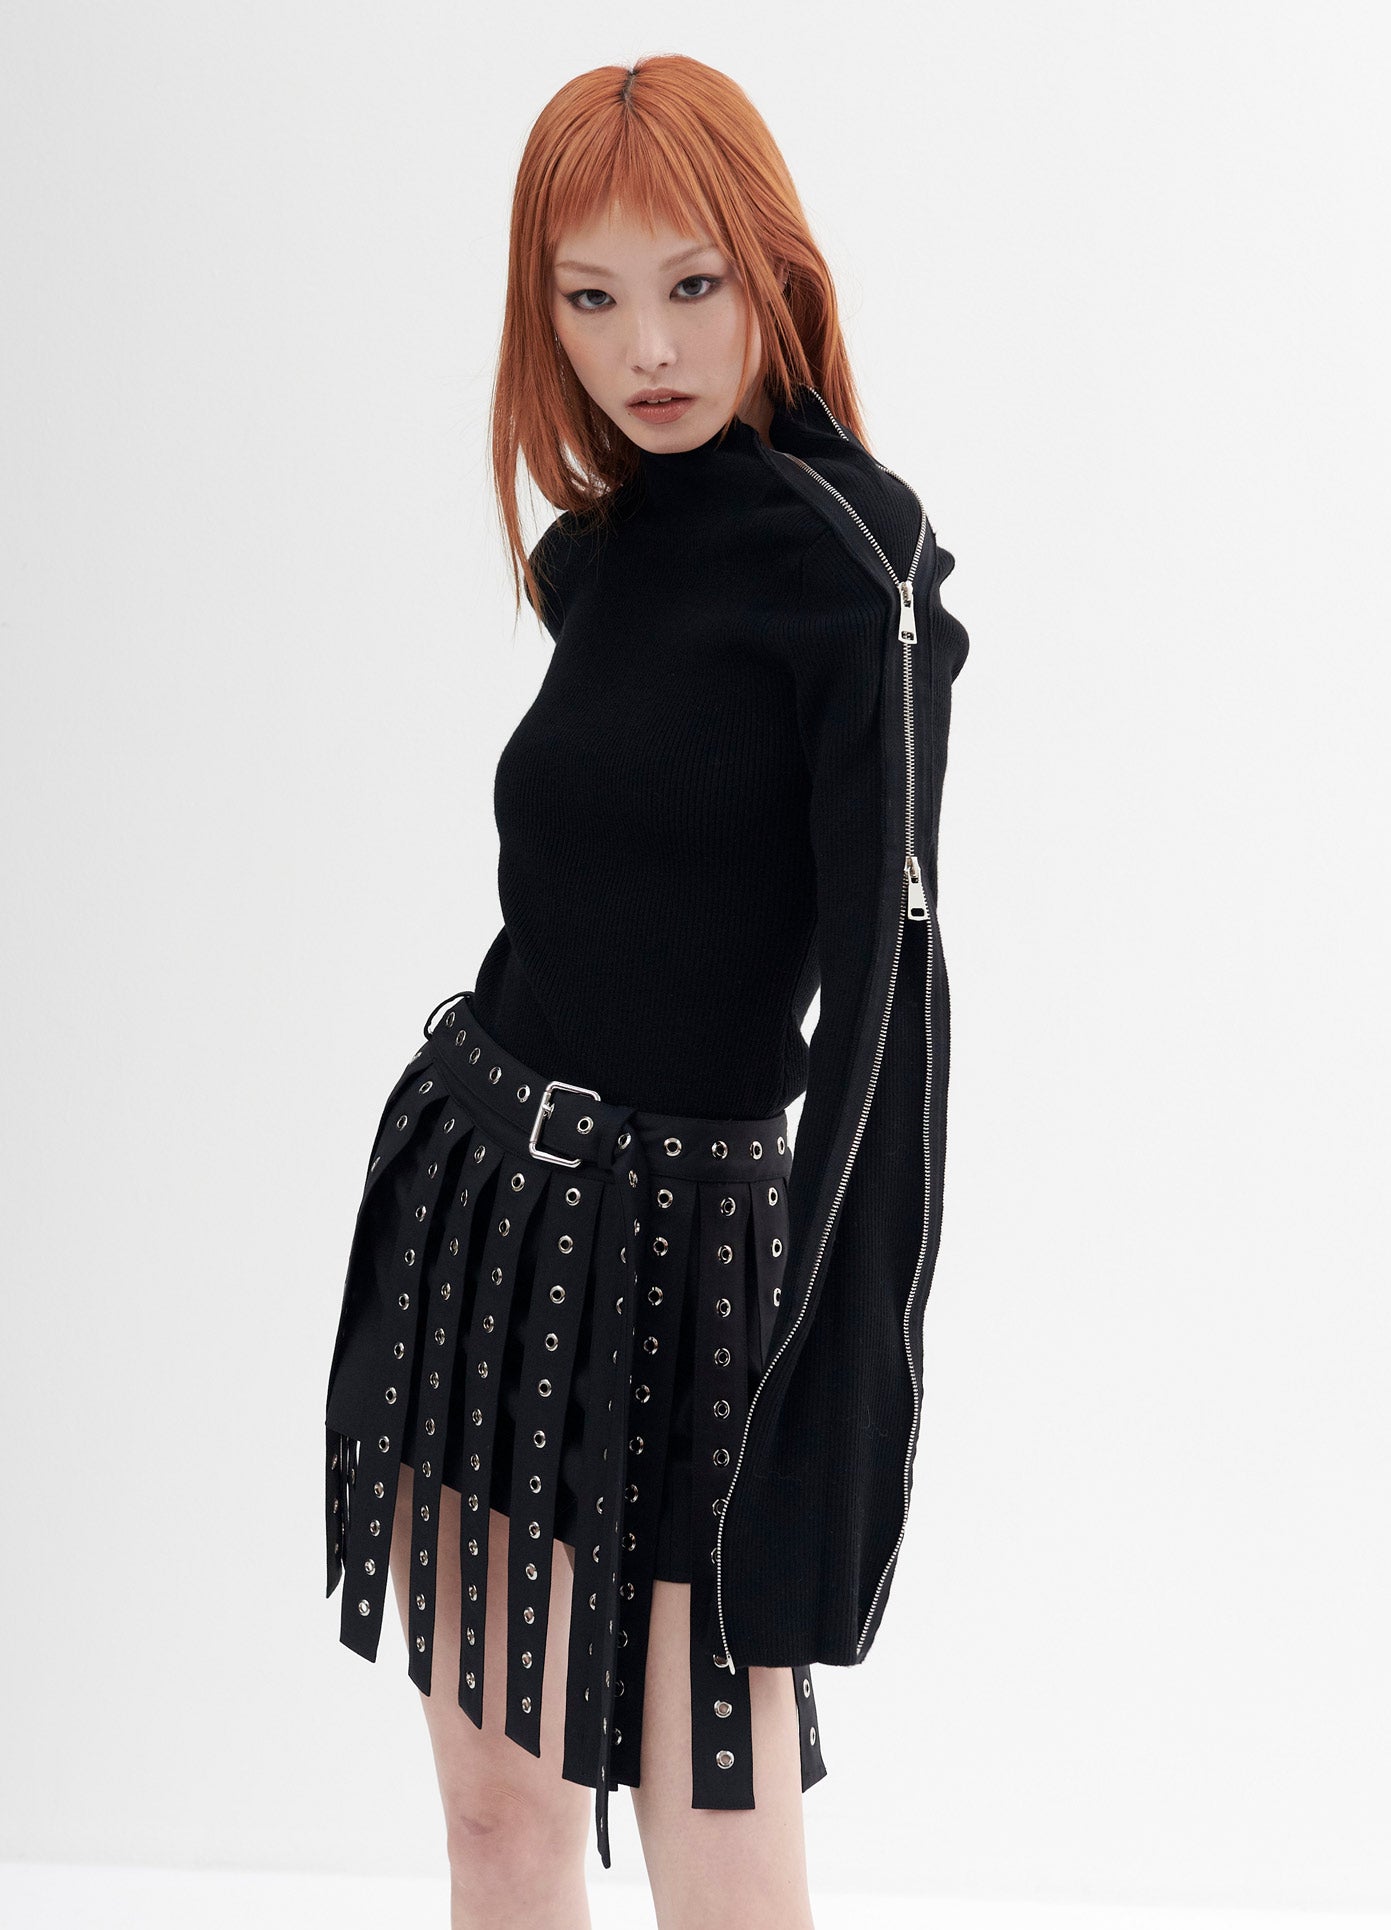 MONSE Zipper Detail Turtleneck Sweater in Black on Model Looking Intensely Side View